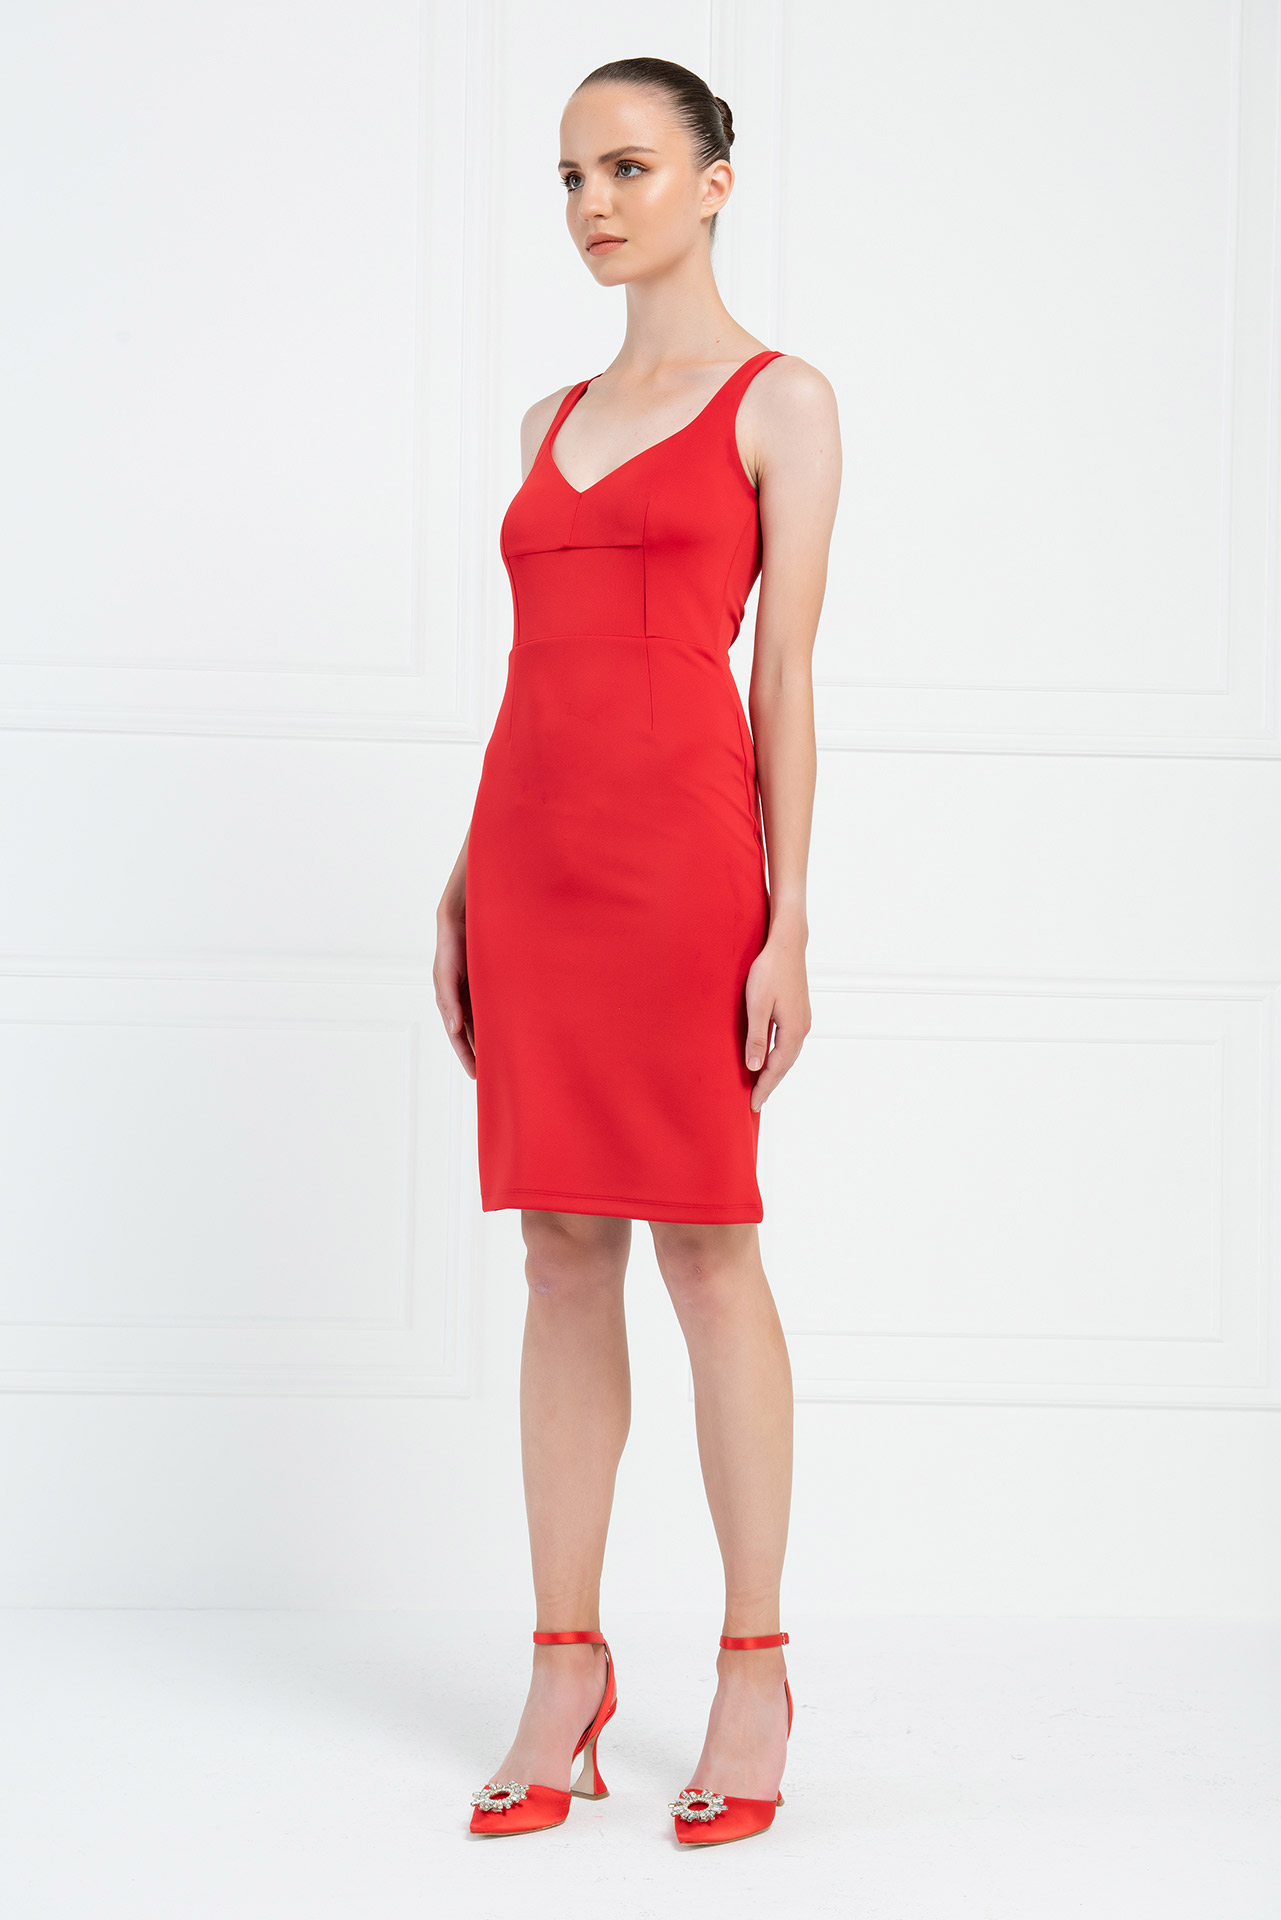 Wholesale Red V-Neck Sleeveless Dress